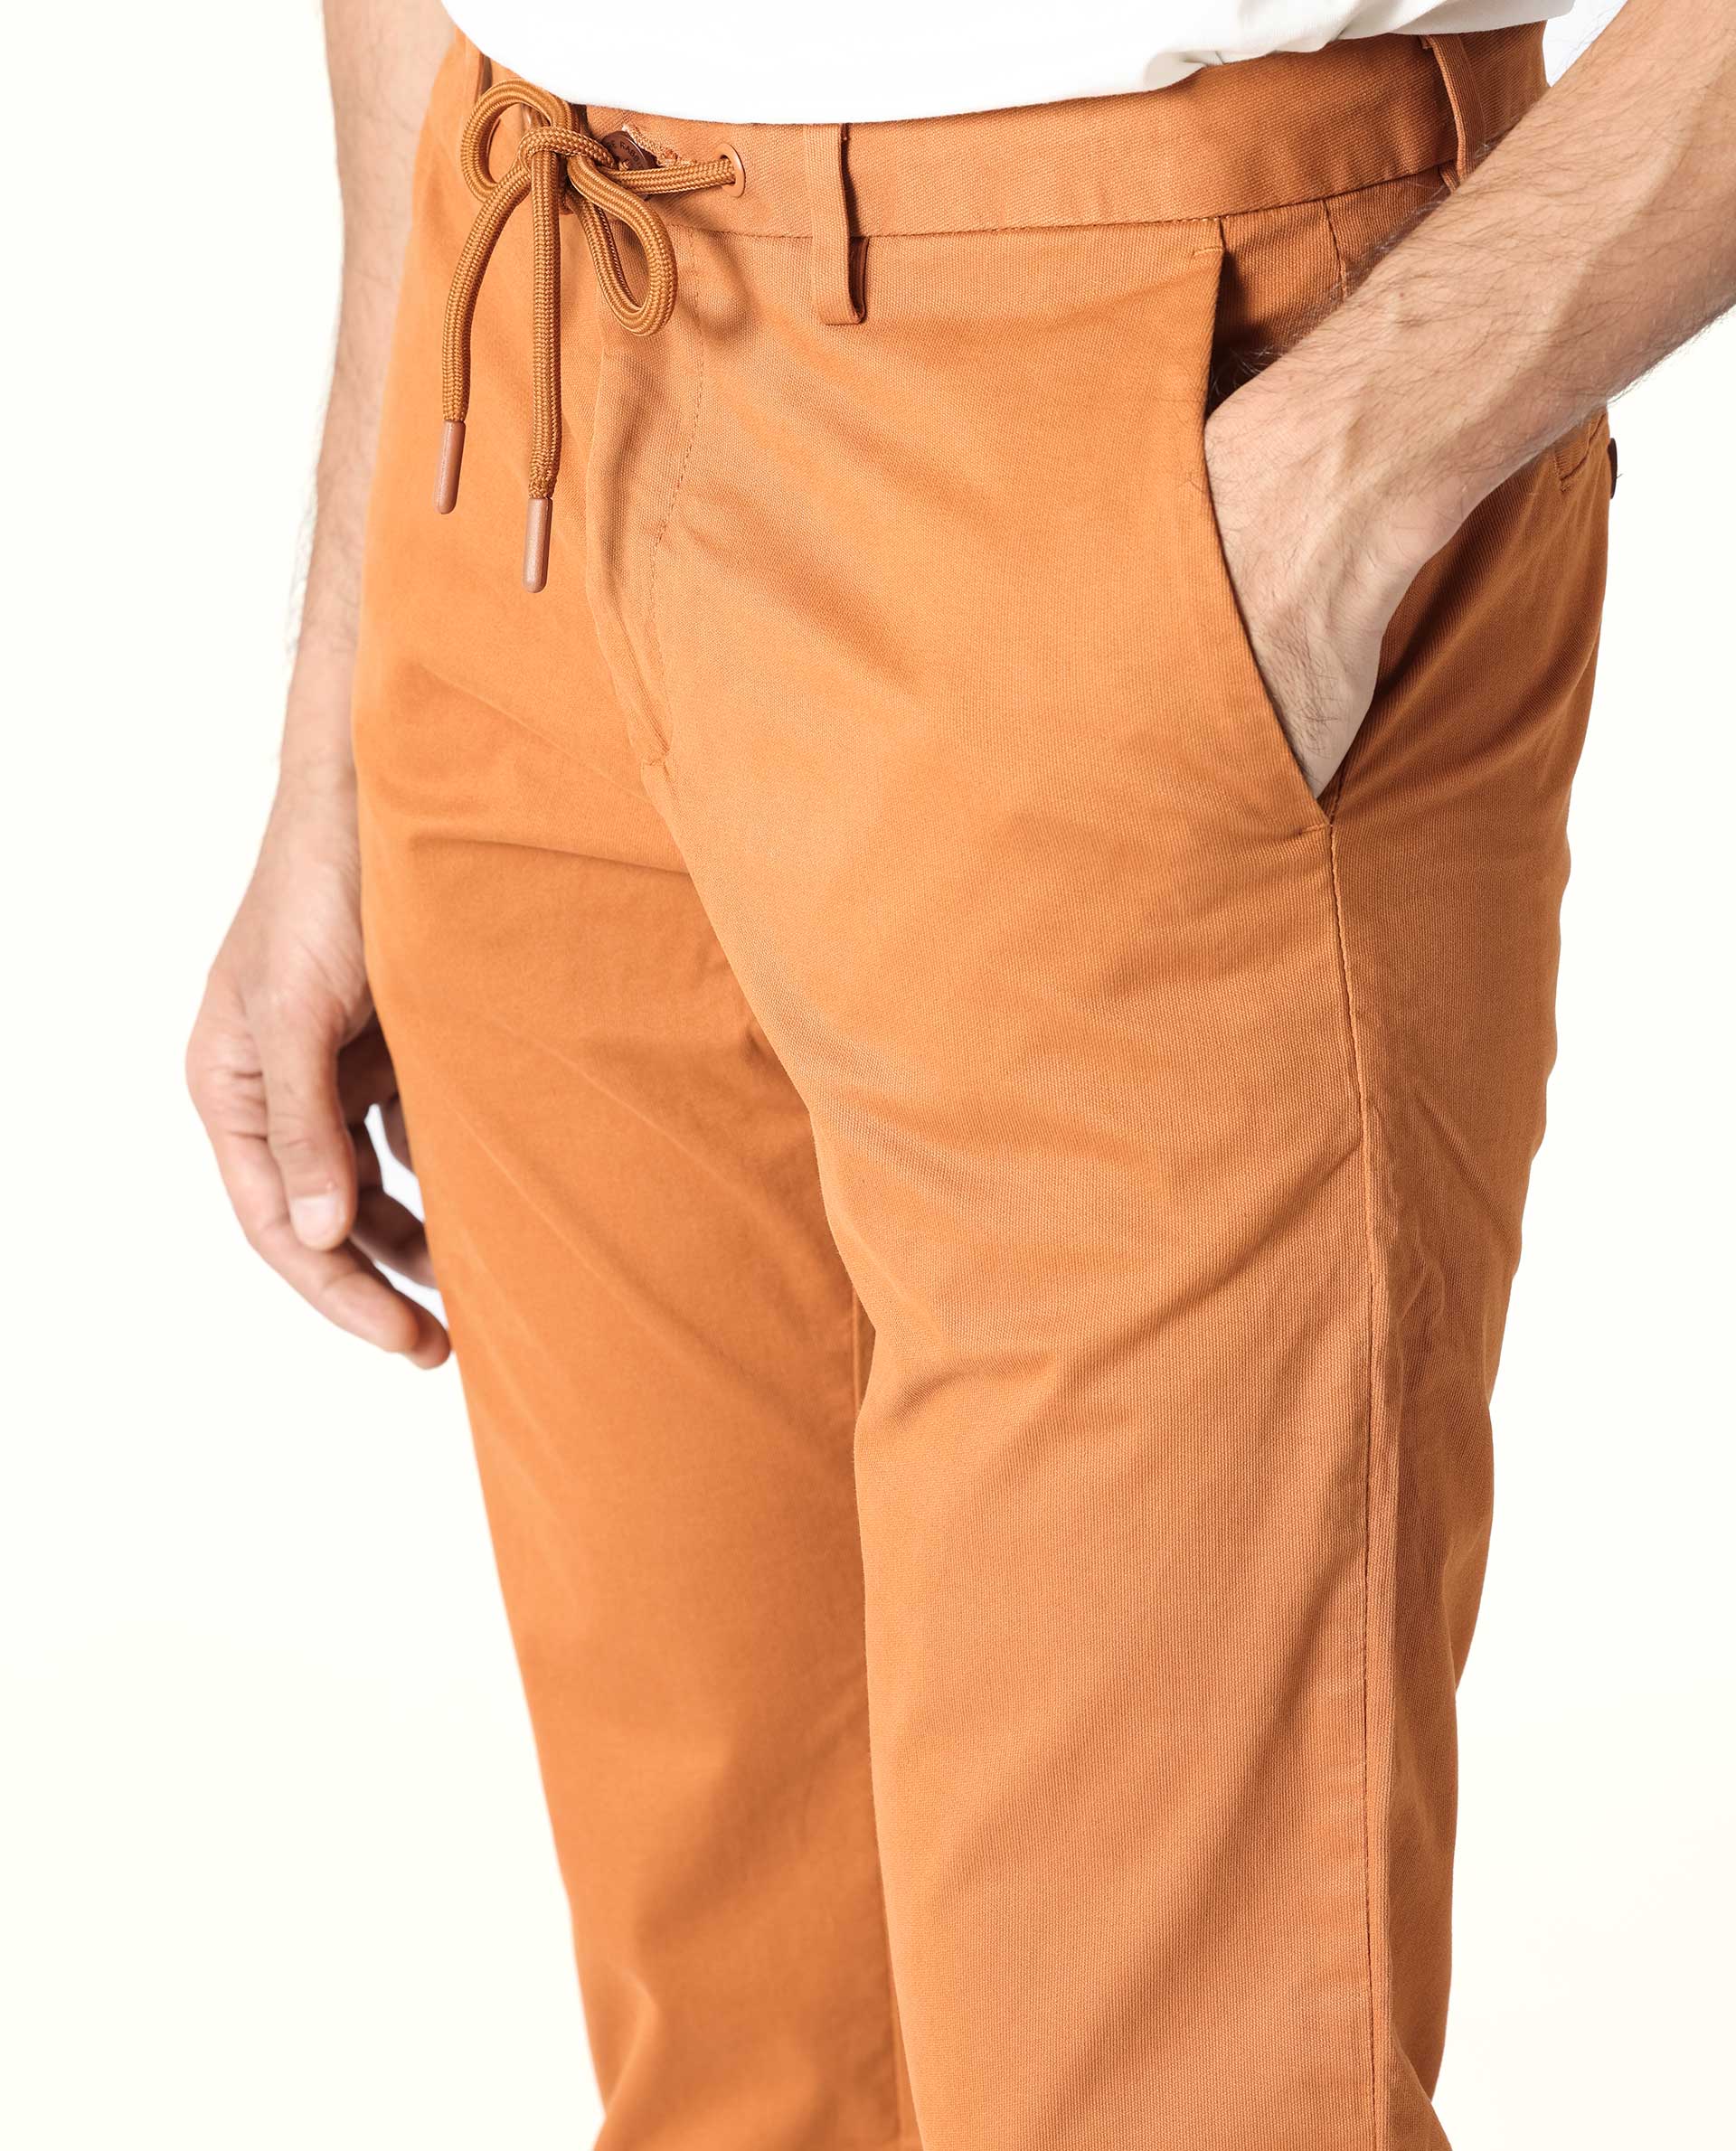 Lederhose schwarz rot Hose Lederjeans NEU Cod piece leather pants trousers  new | eBay